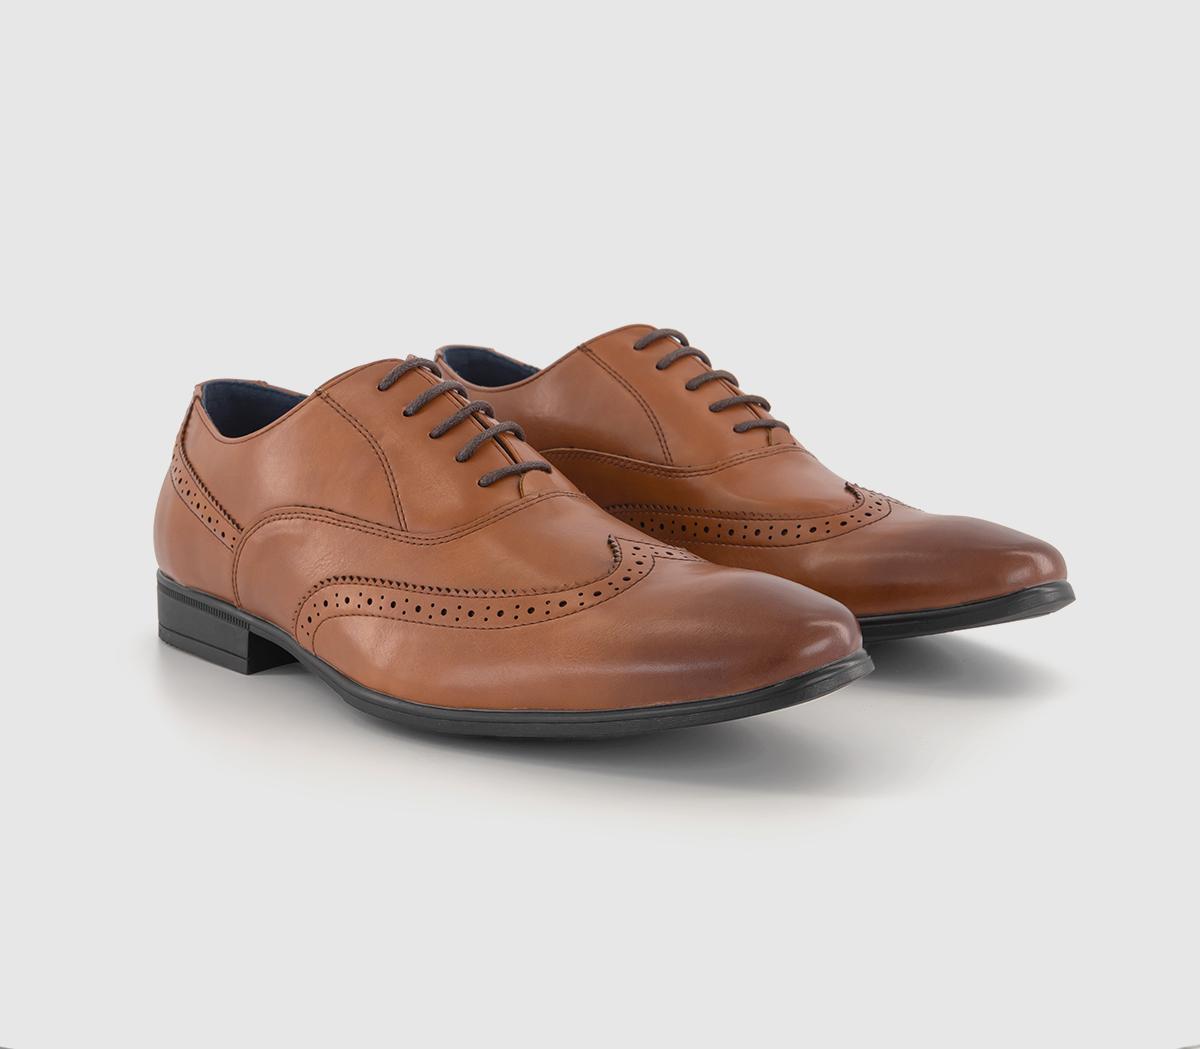 OFFICE Mens Martel Wingtip Oxford Shoes Tan, 11